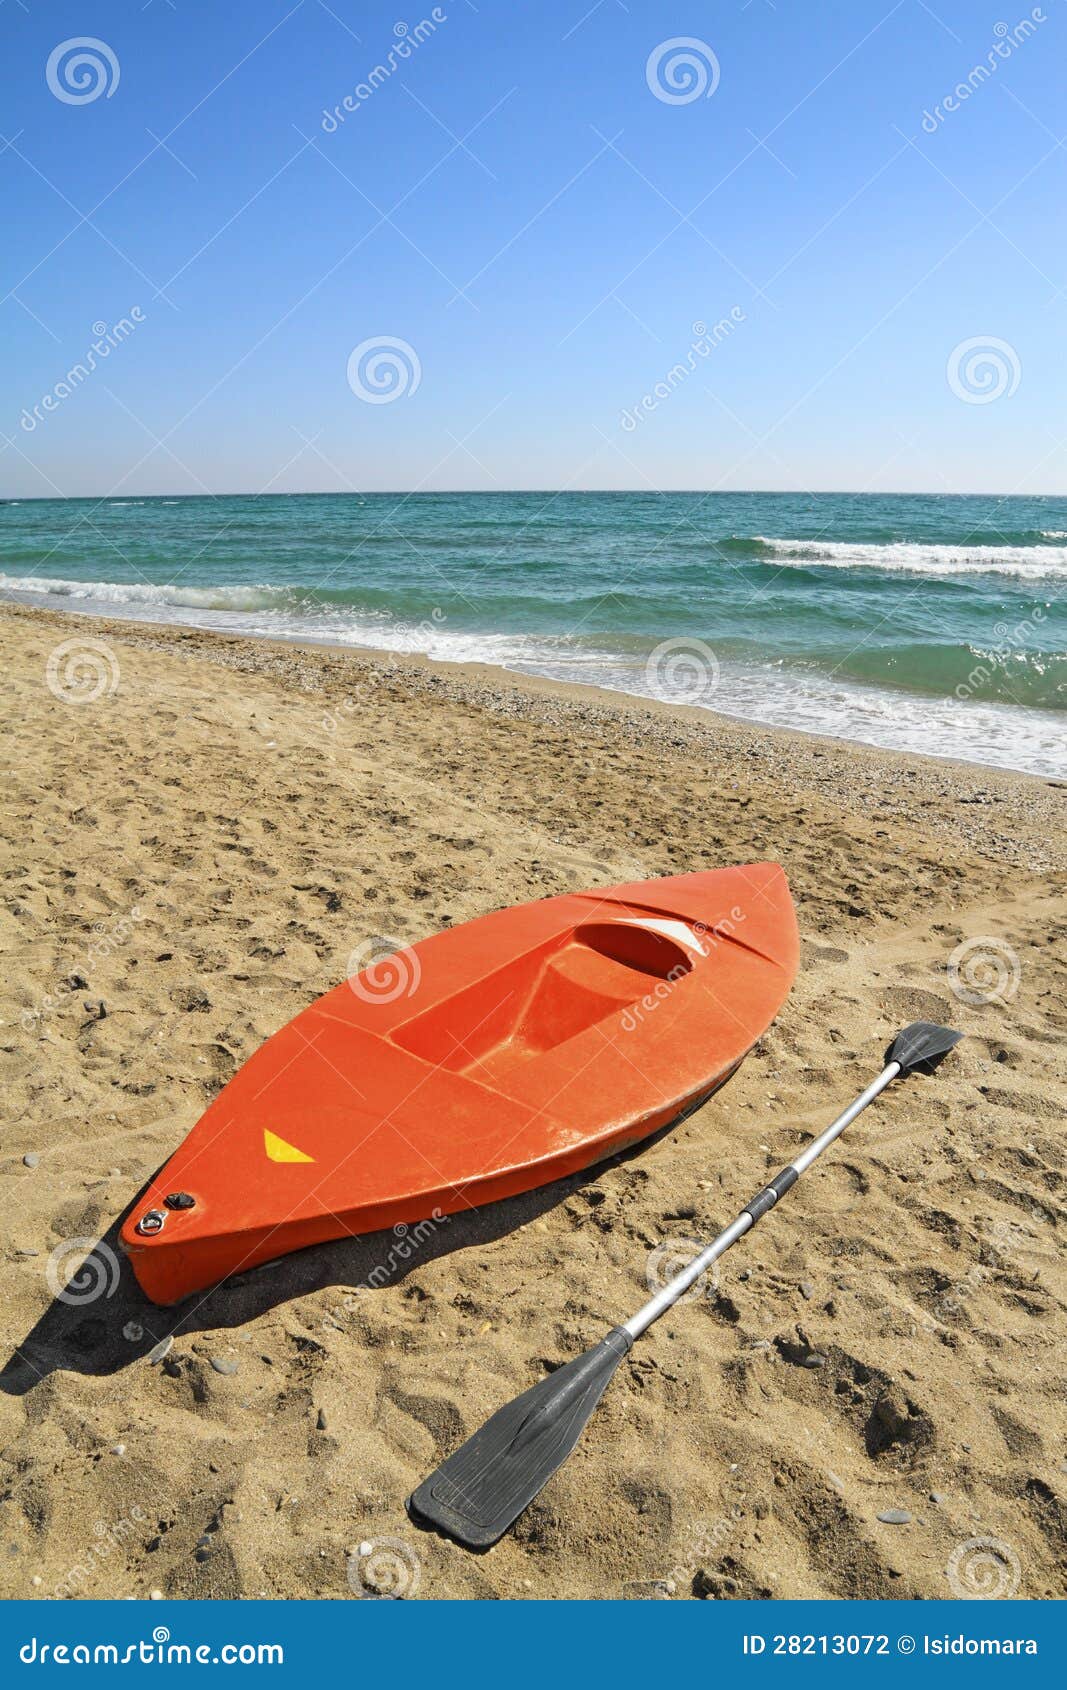 Canoe on the beach stock photo. Image of nature, canoe - 28213072